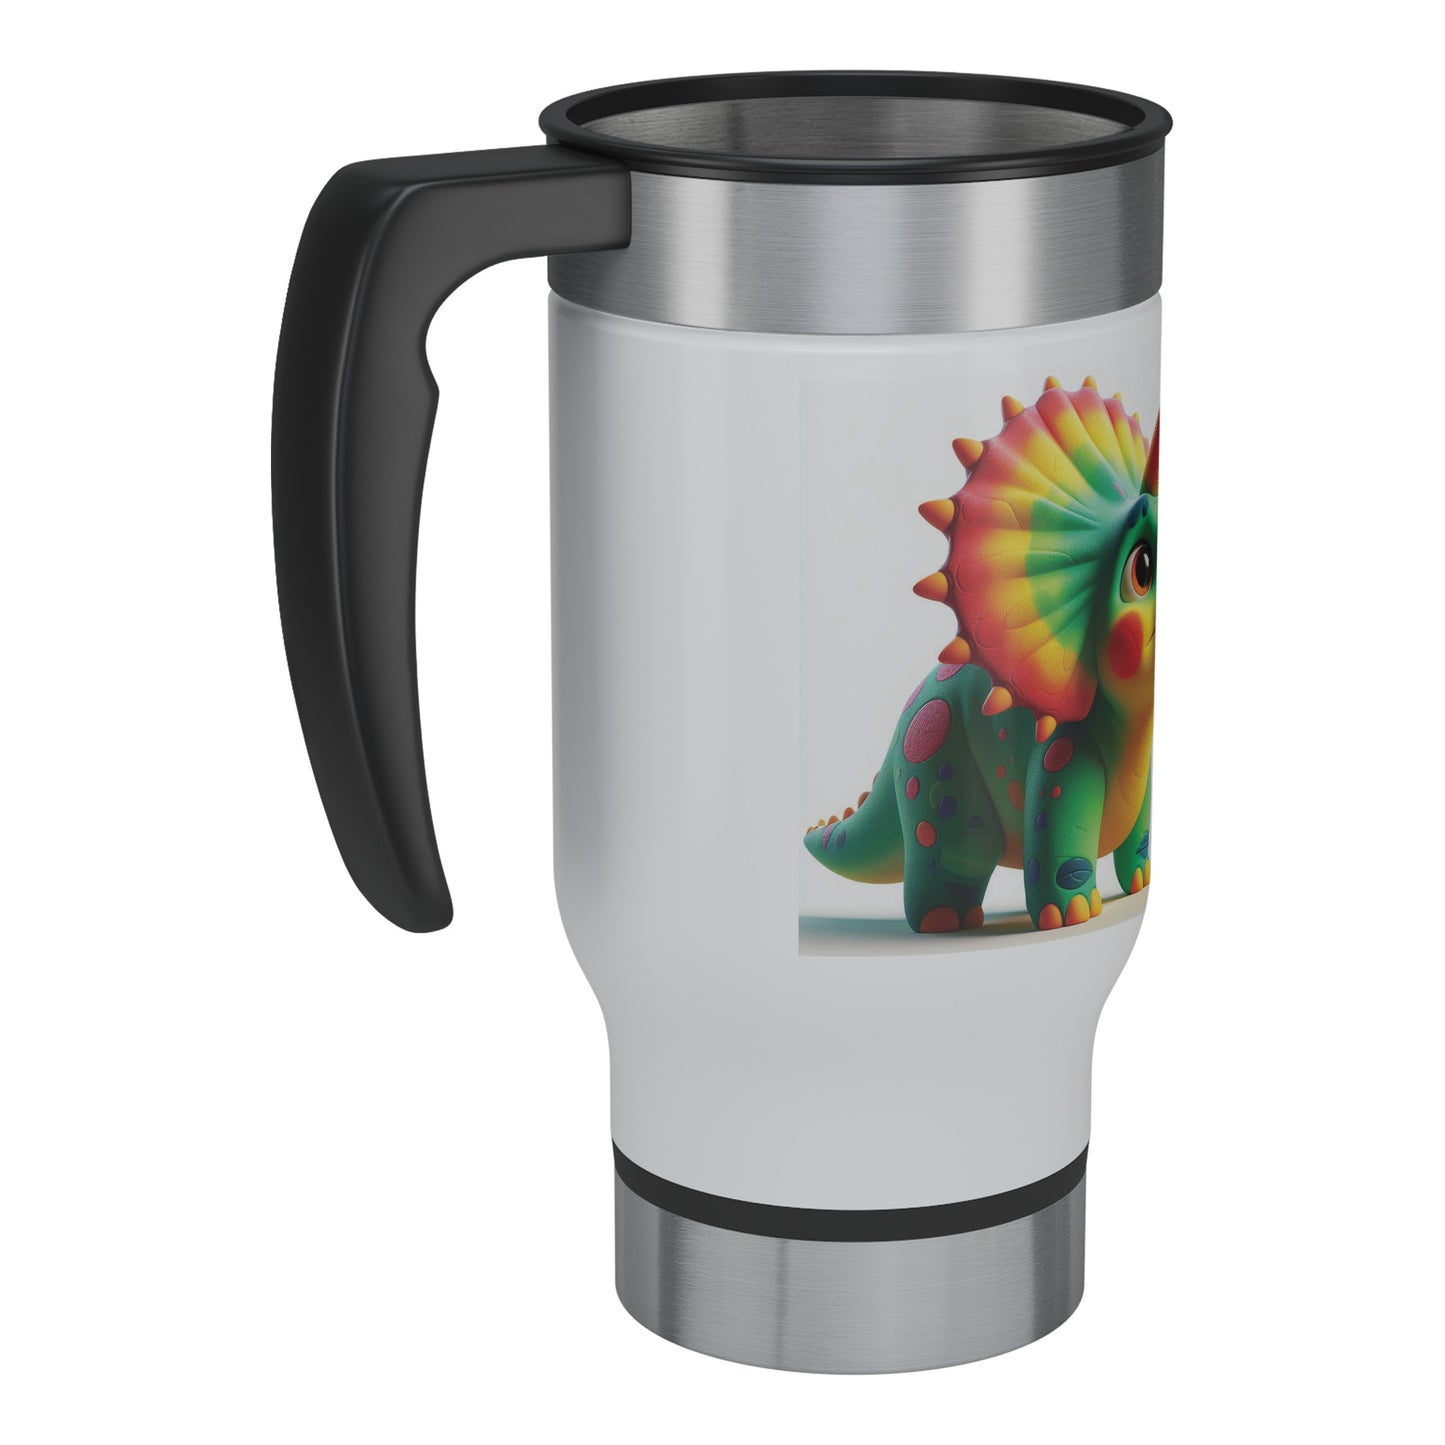 Adorable & Charming Dinosaurs - Travel Mug - Dinosaur #12